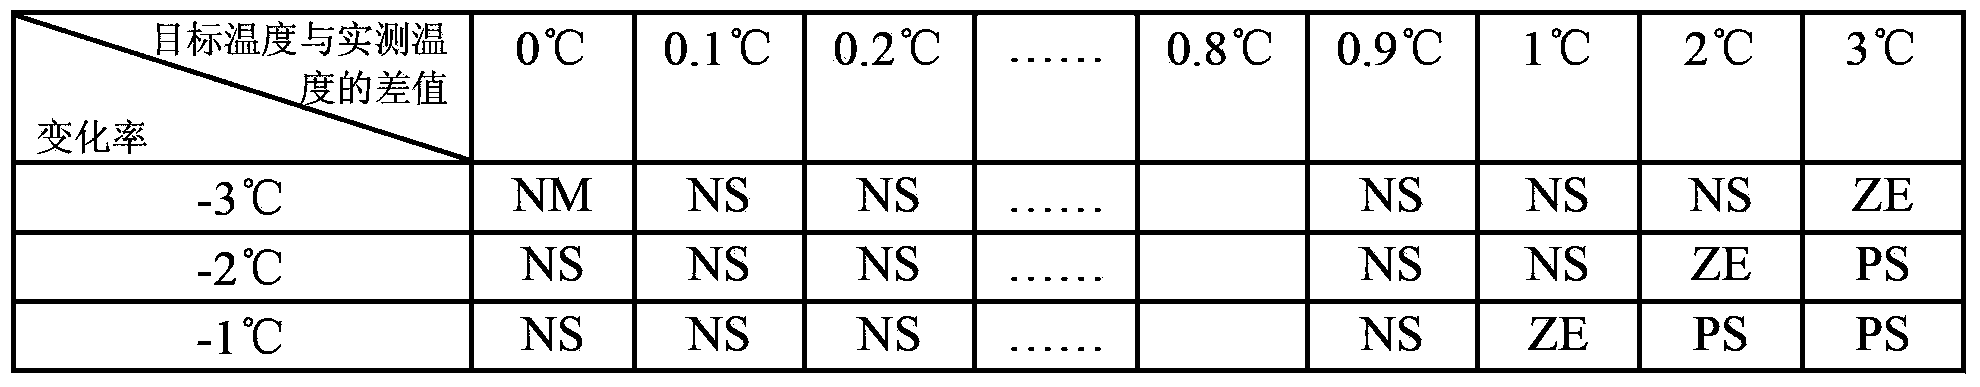 Temperature precision control method for frequency conversion refrigerator